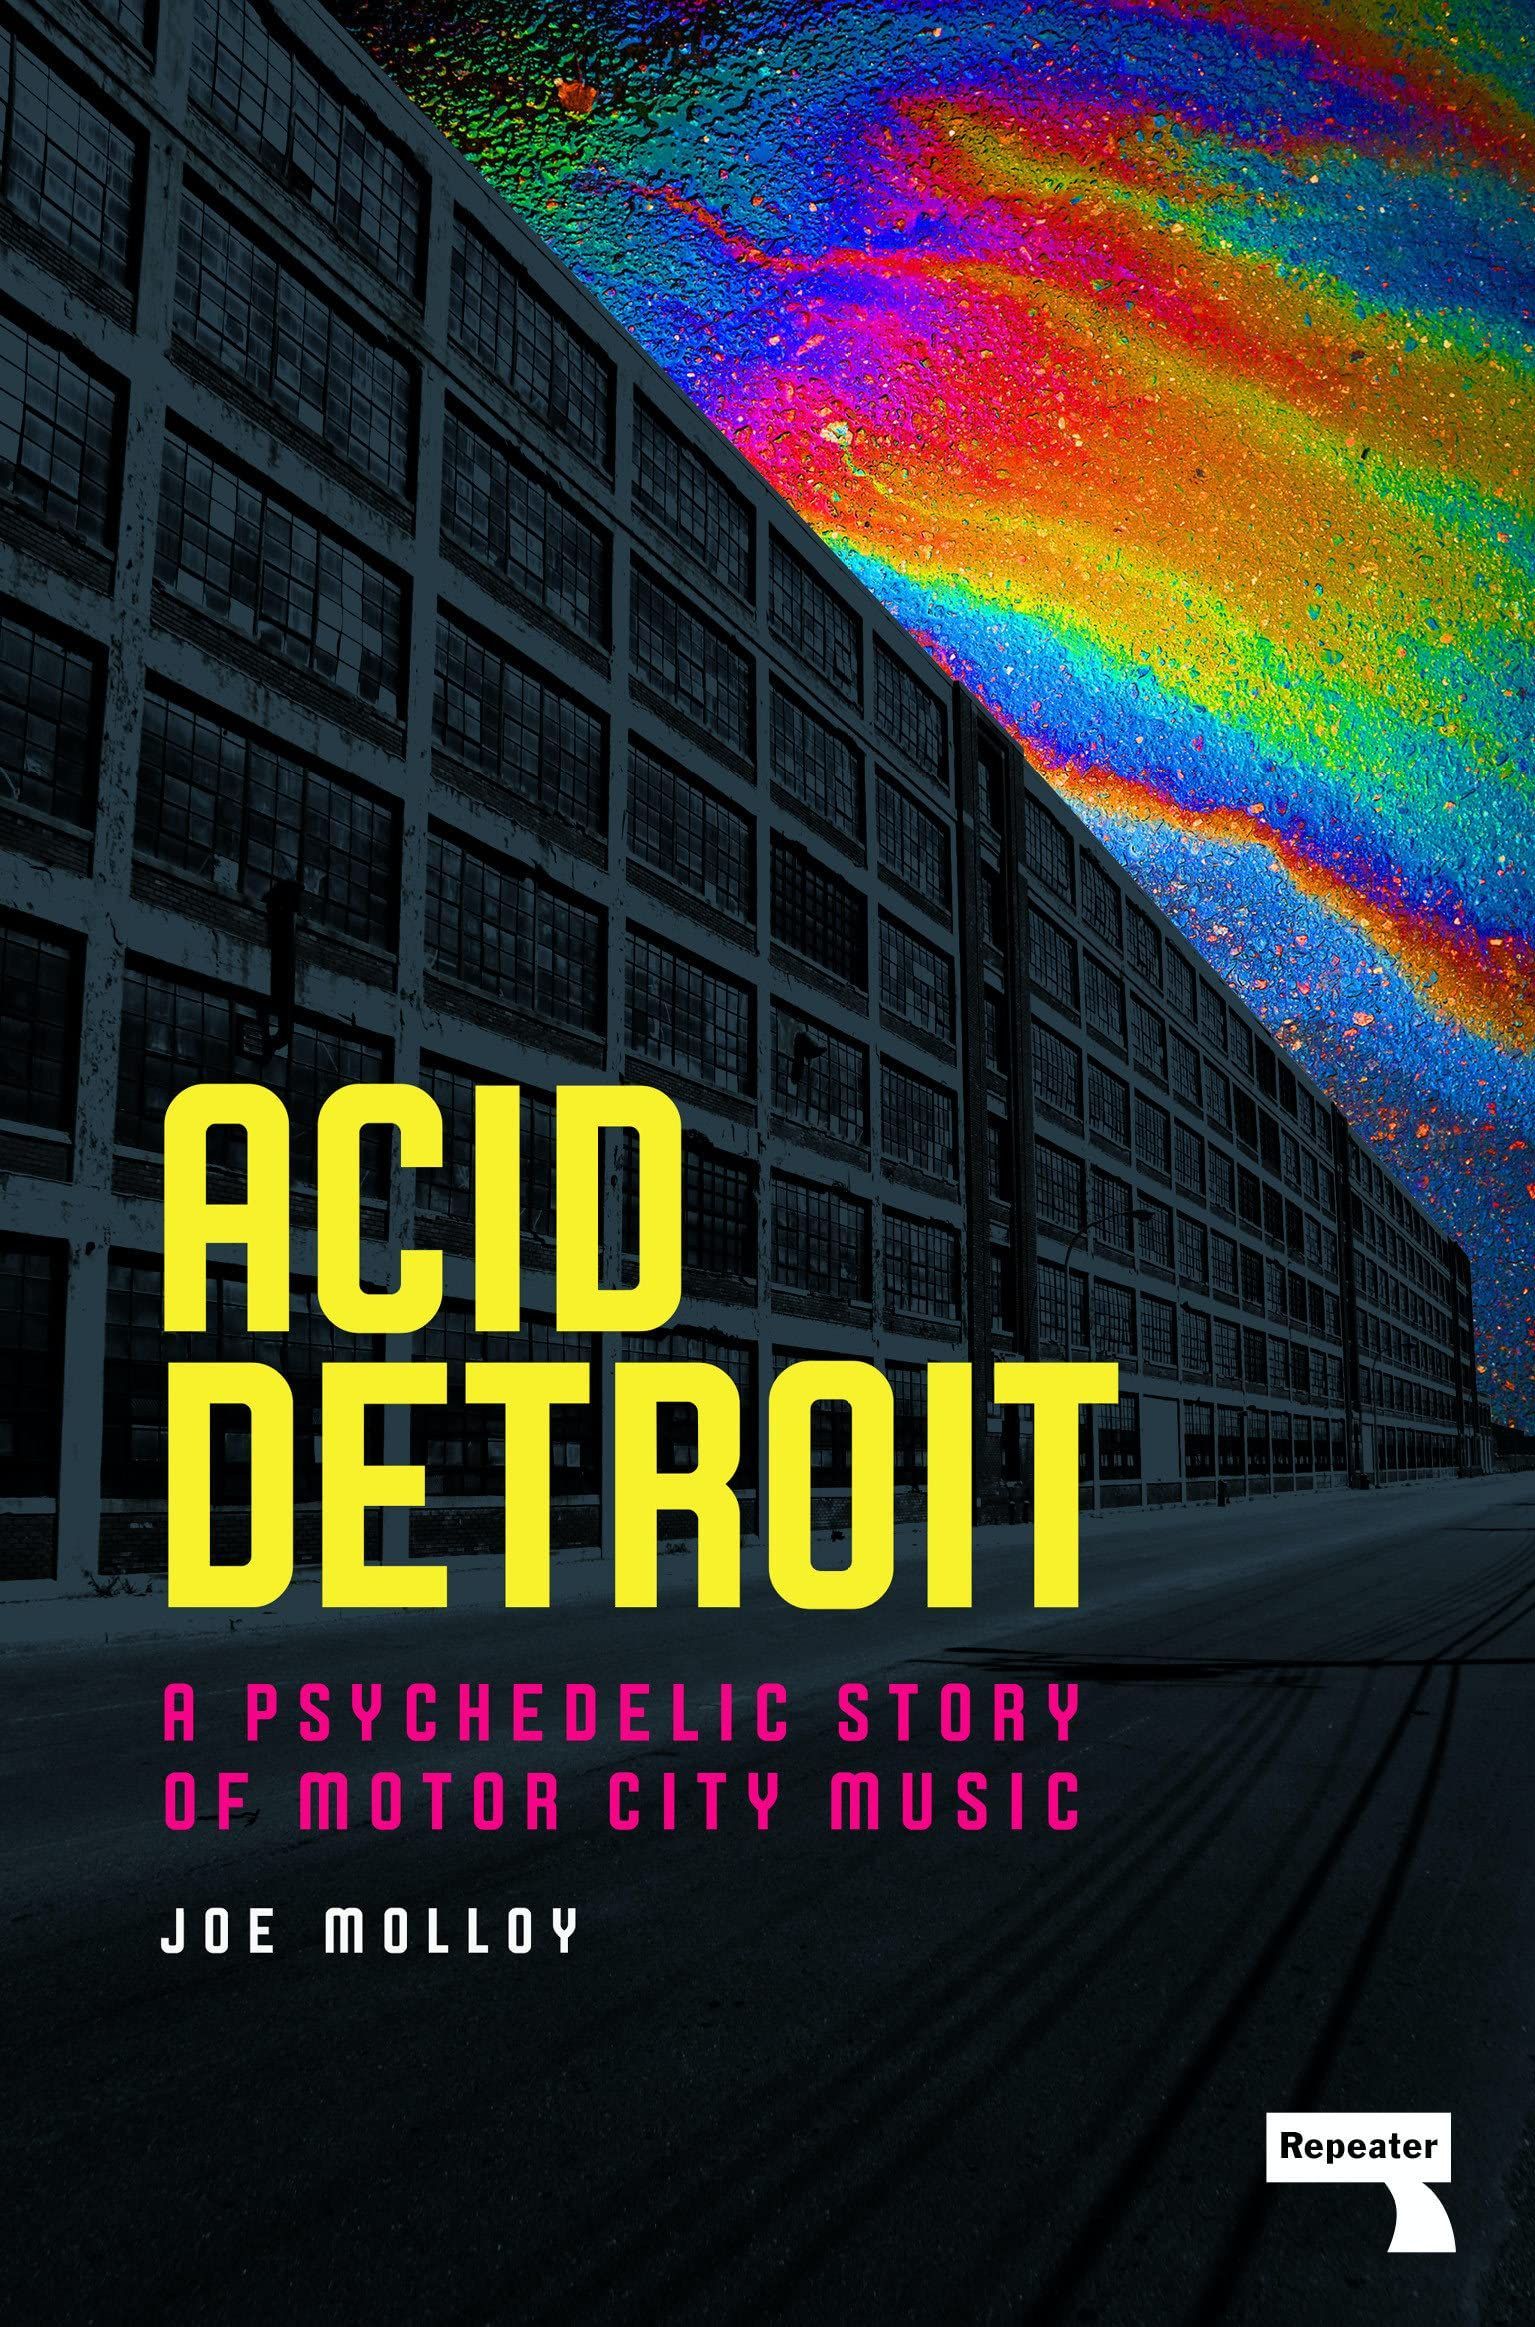 Through the Wreckage: On Joe Molloy’s “Acid Detroit”